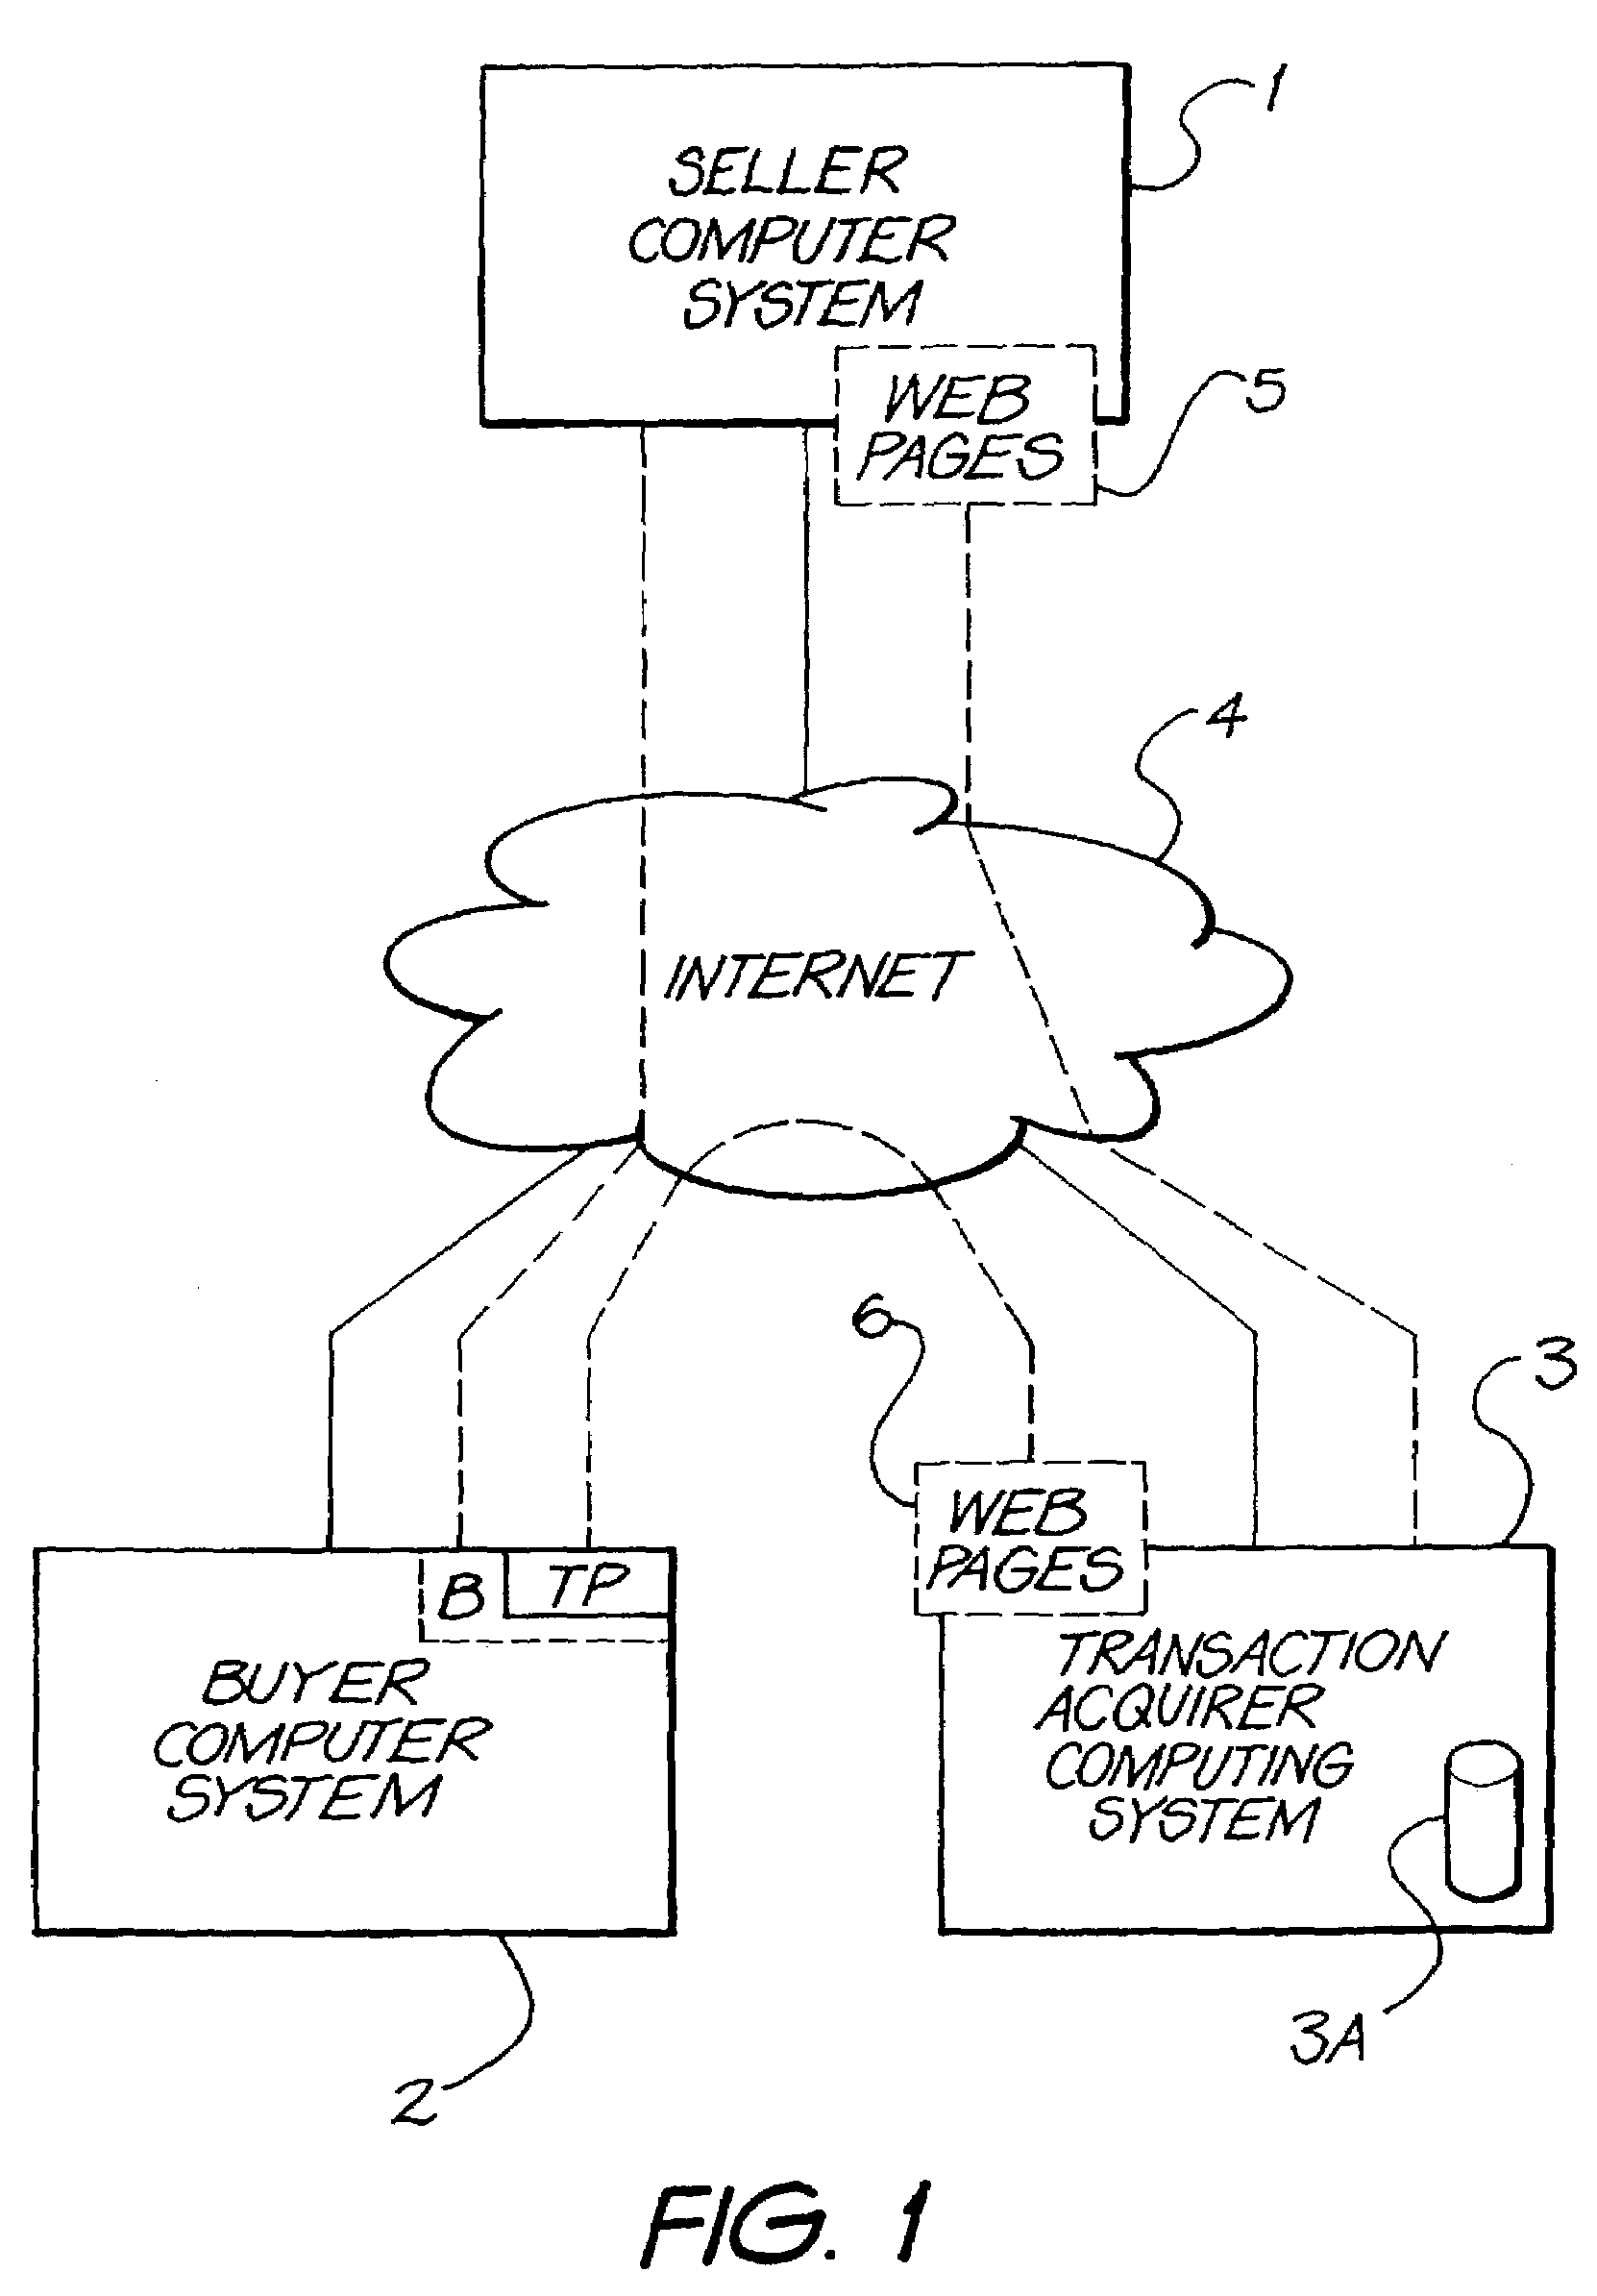 System for handling network transactions